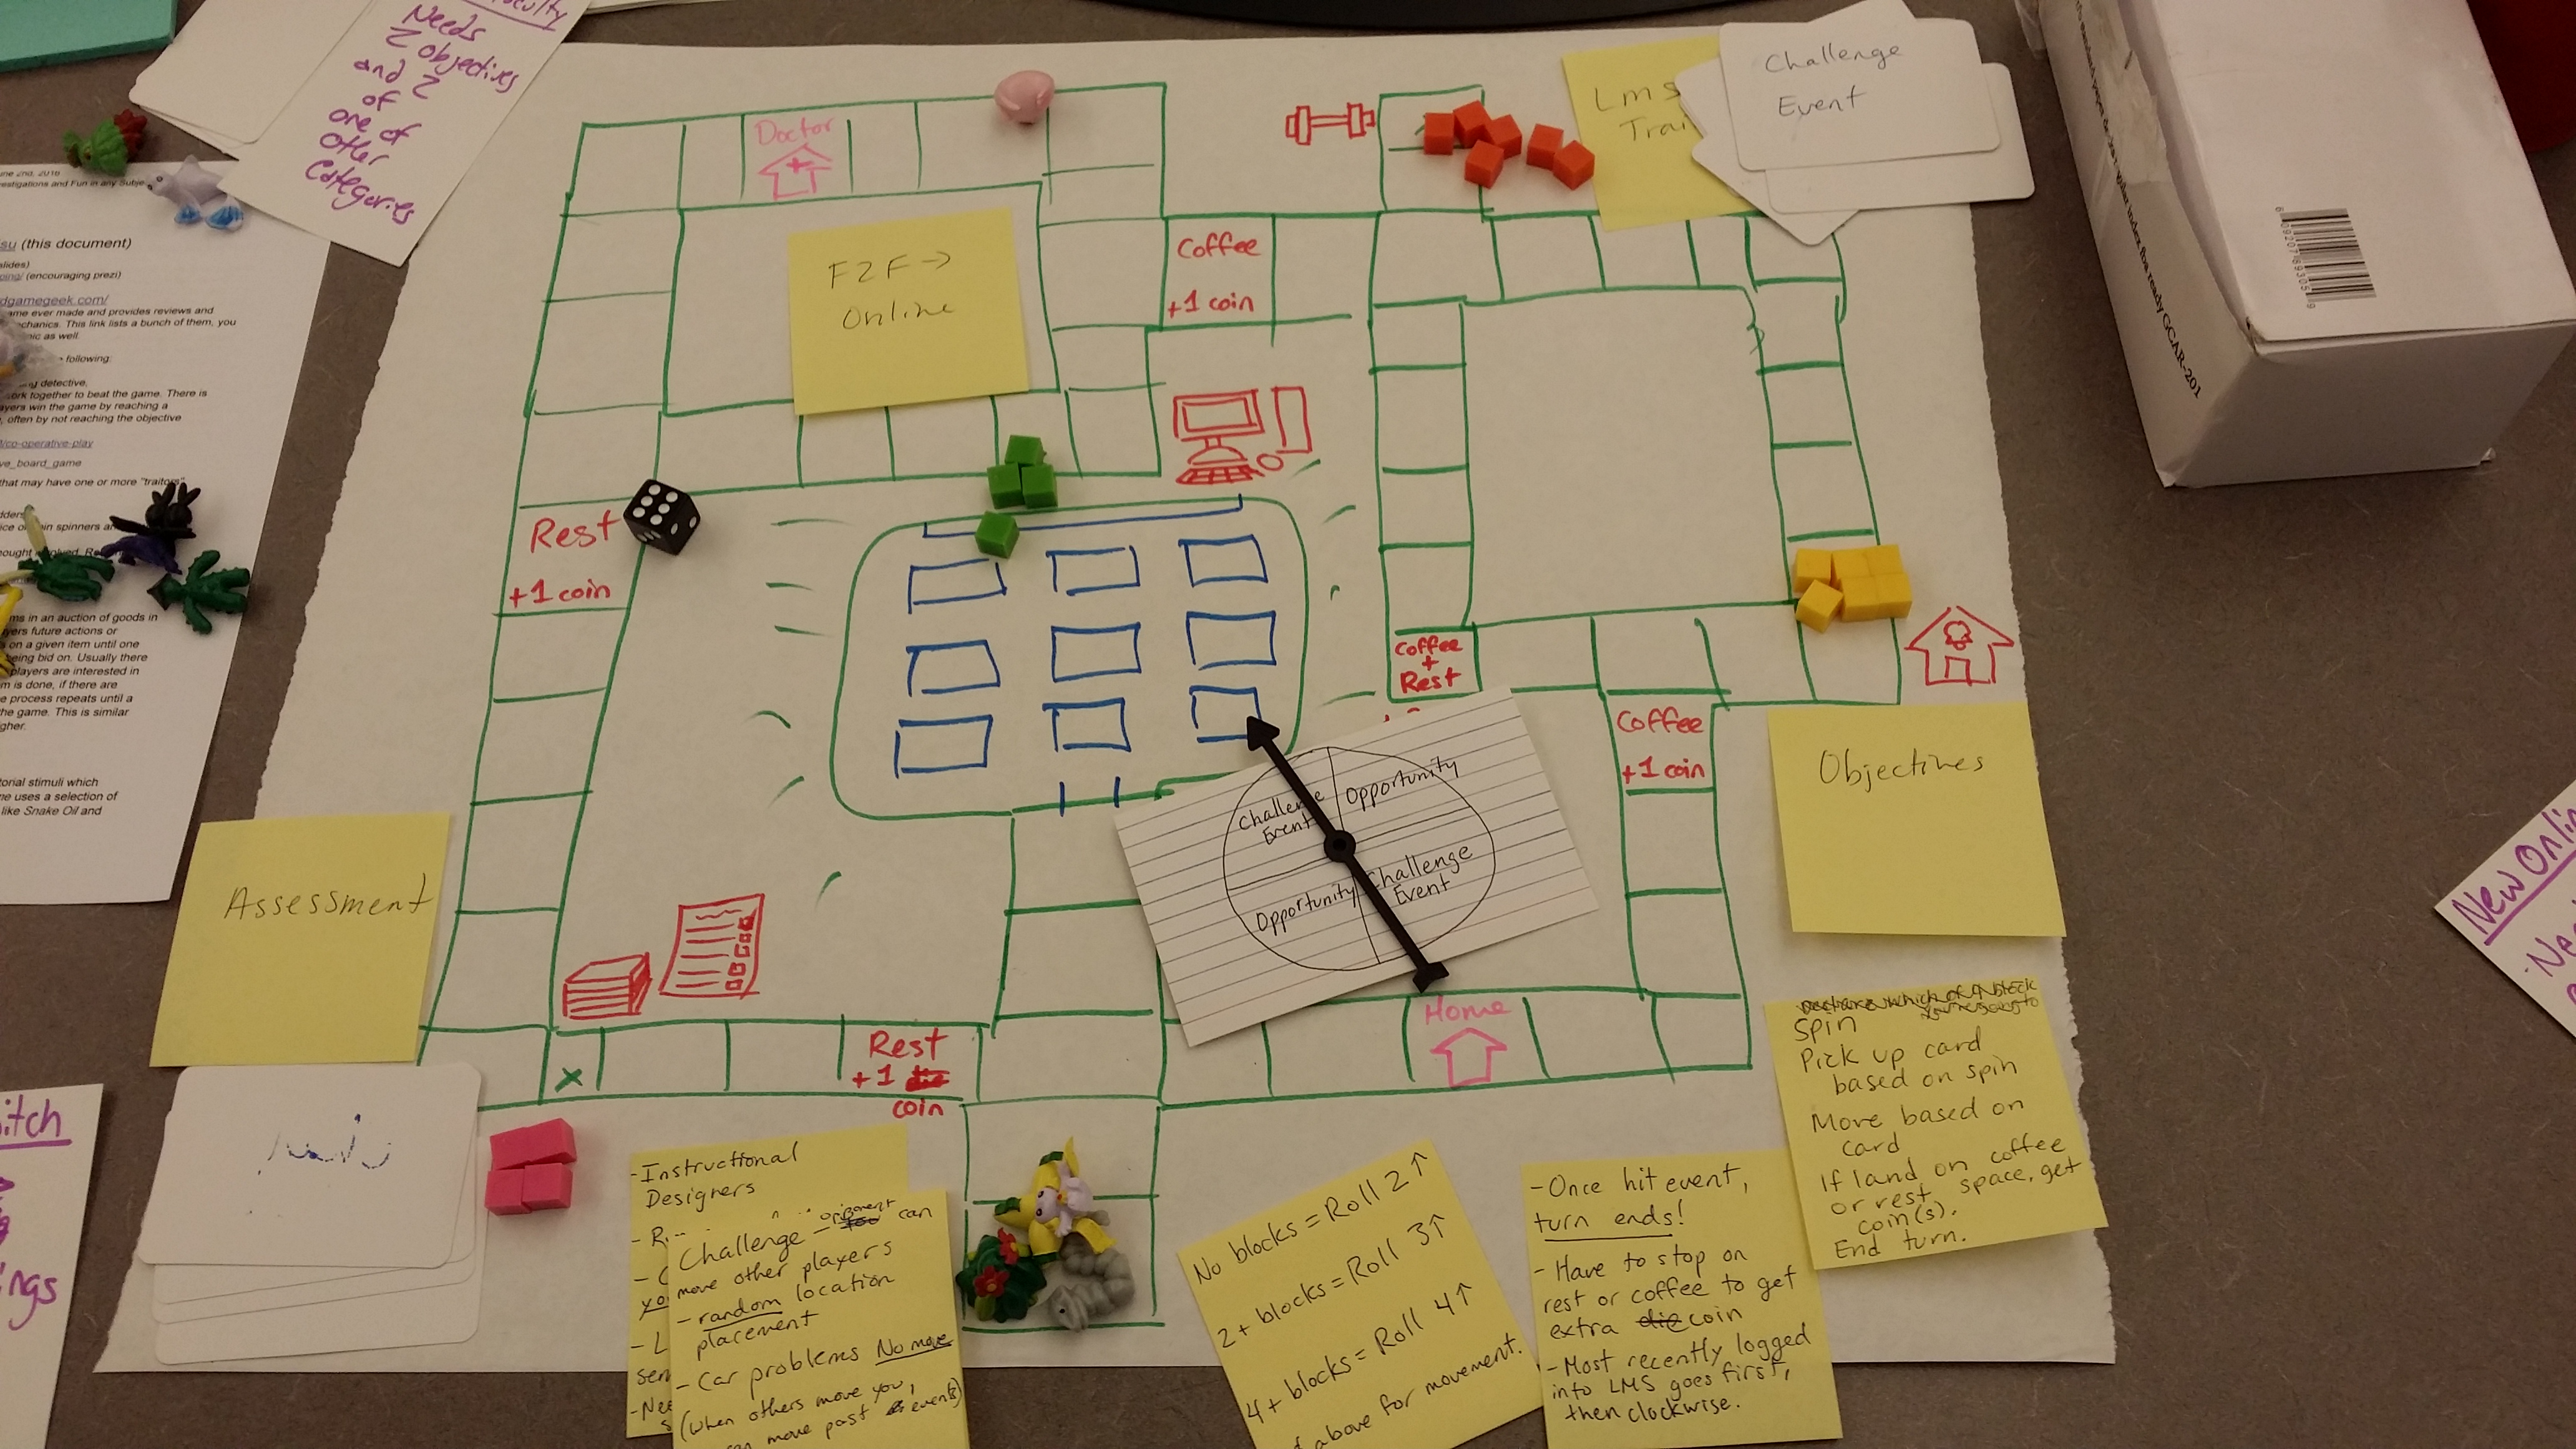 Paper Board Game I built at Emerging Learning Design Conference 2016.